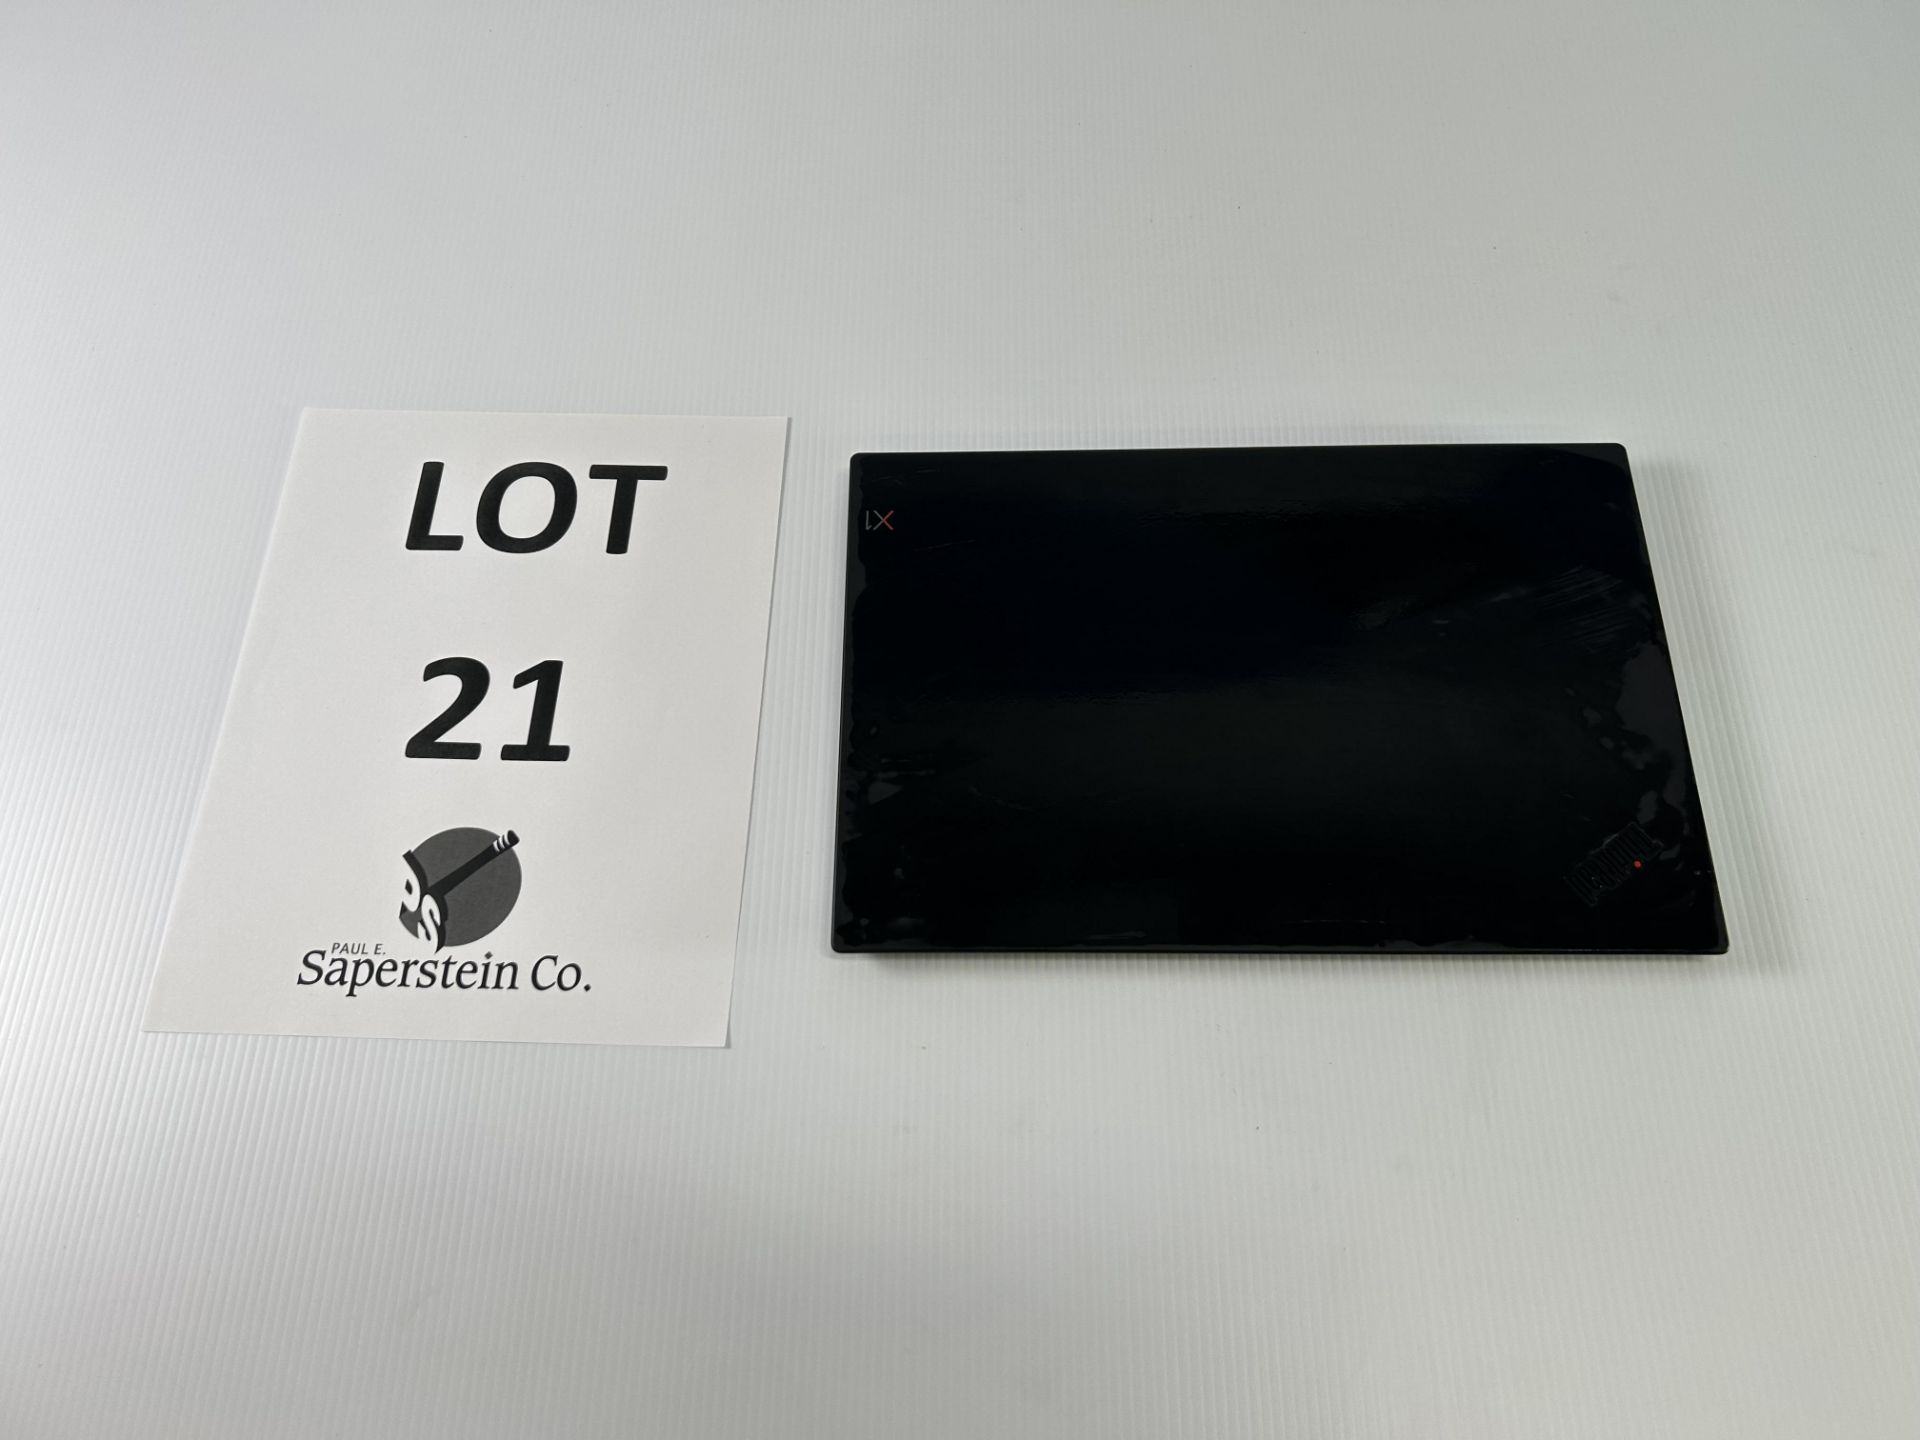 2018 6th Generation ThinkPad X1 Carbon Laptop Model- 20kh-002rus 18/08, 512GB Hard Drive, 8th Gen I7